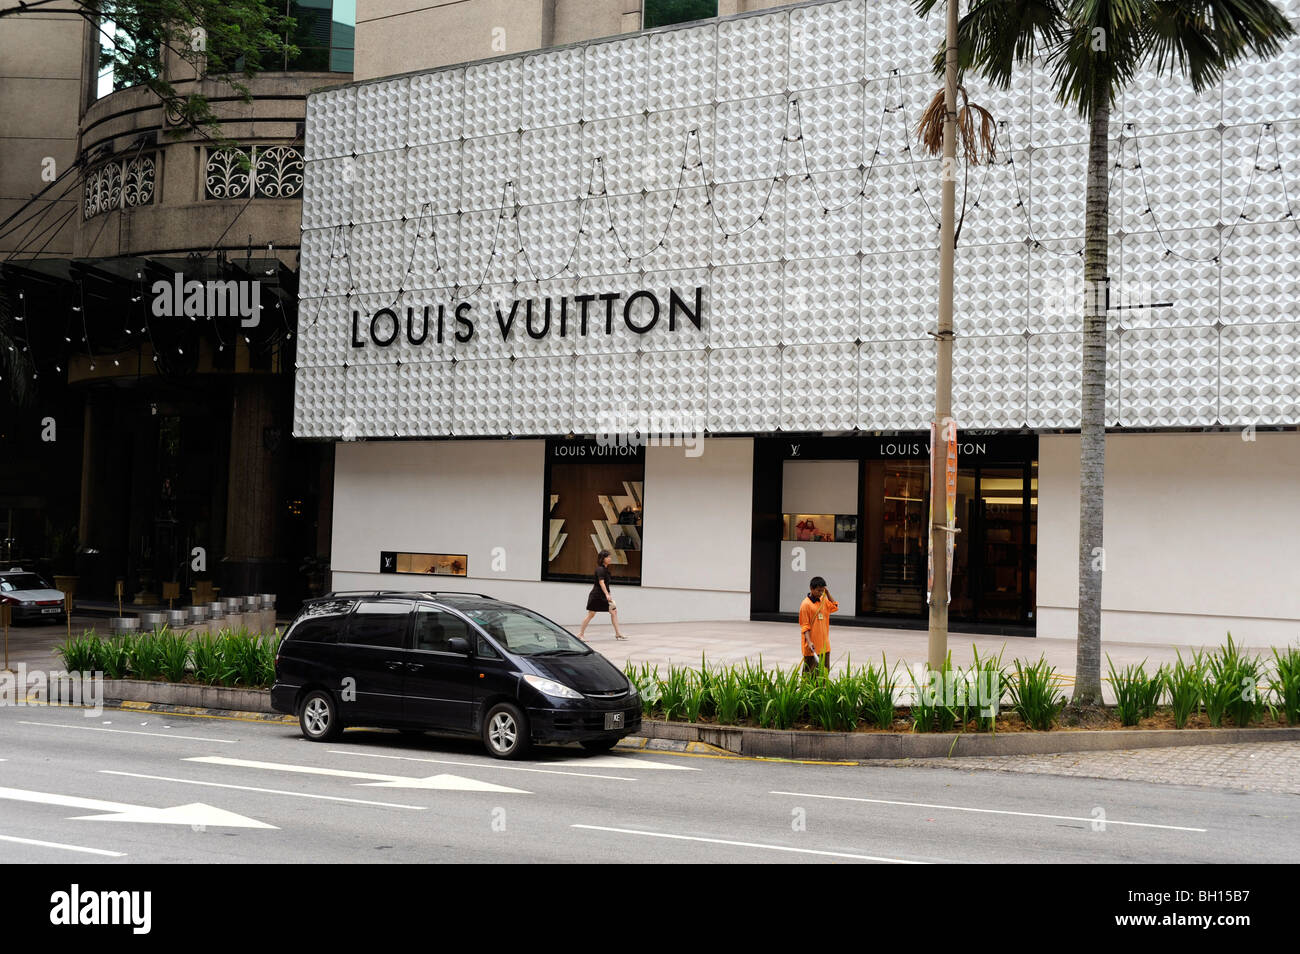 Louis Vuitton shop in Bintang Walk,Kuala Lumpur,Malaysia,Indonesia,Asia  Stock Photo - Alamy